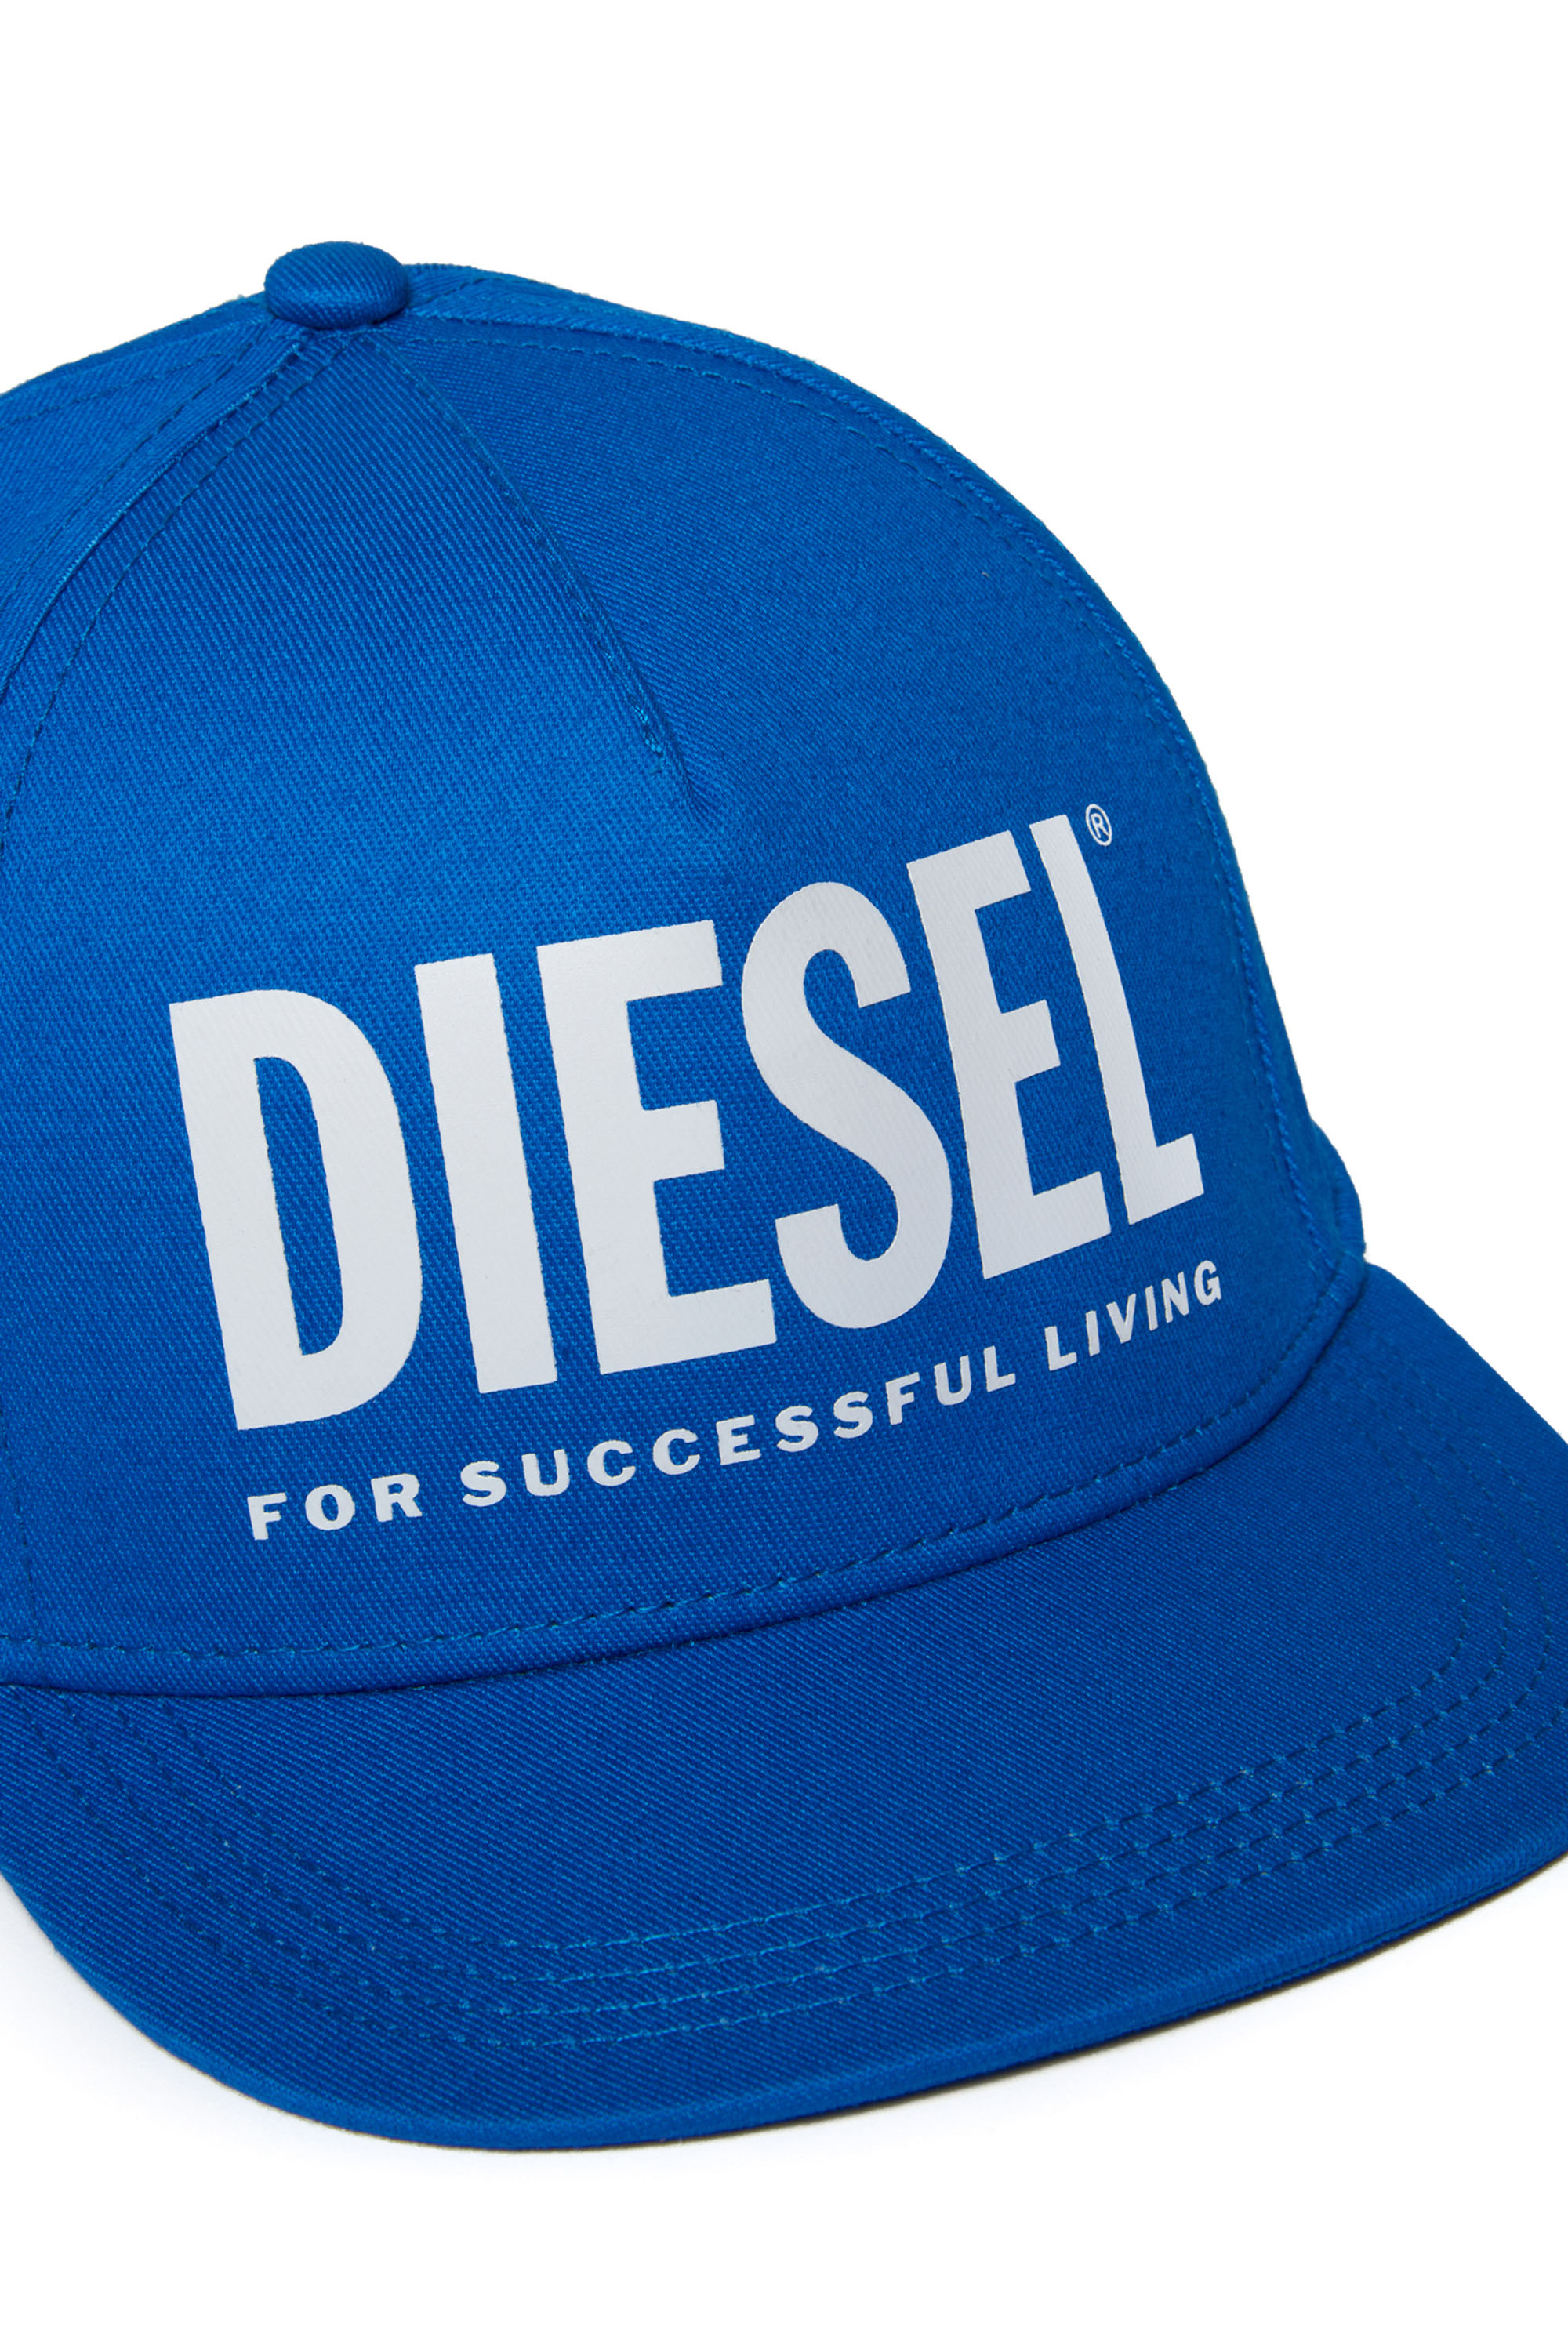 Diesel - FOLLY, Blau - Image 3